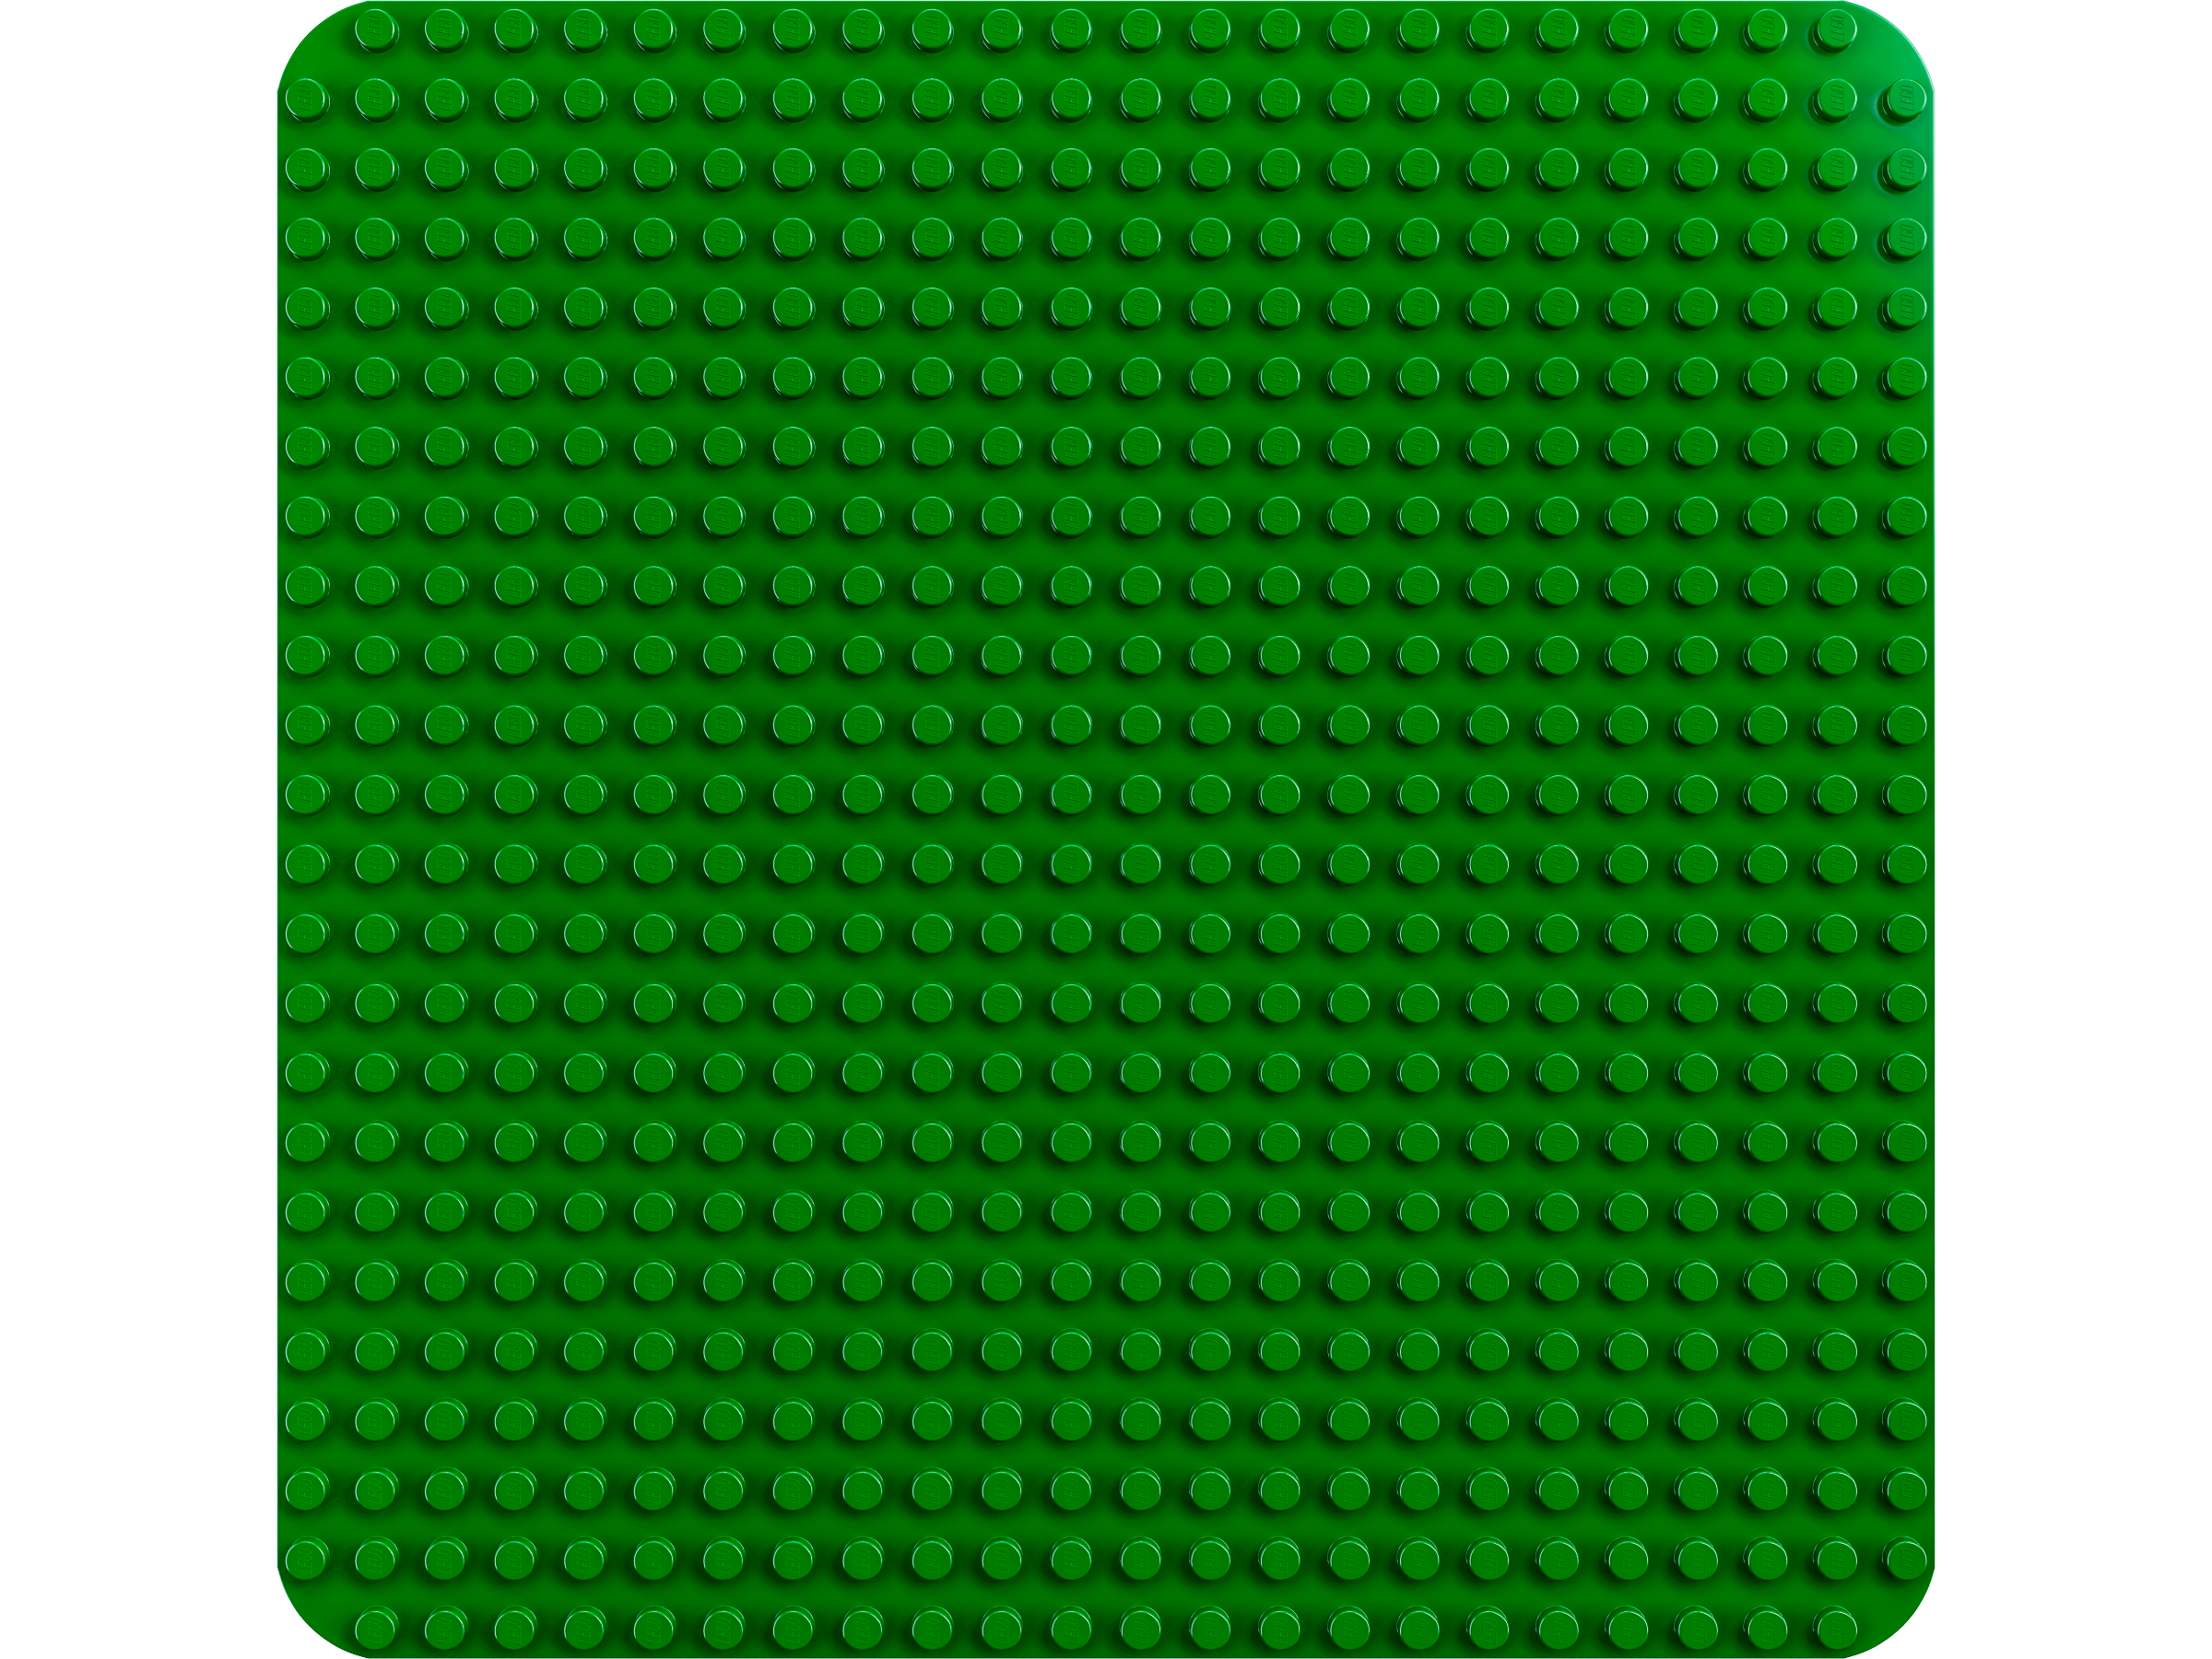 Lego Duplo Base Board Plate Green Large 24 x 24 studs 